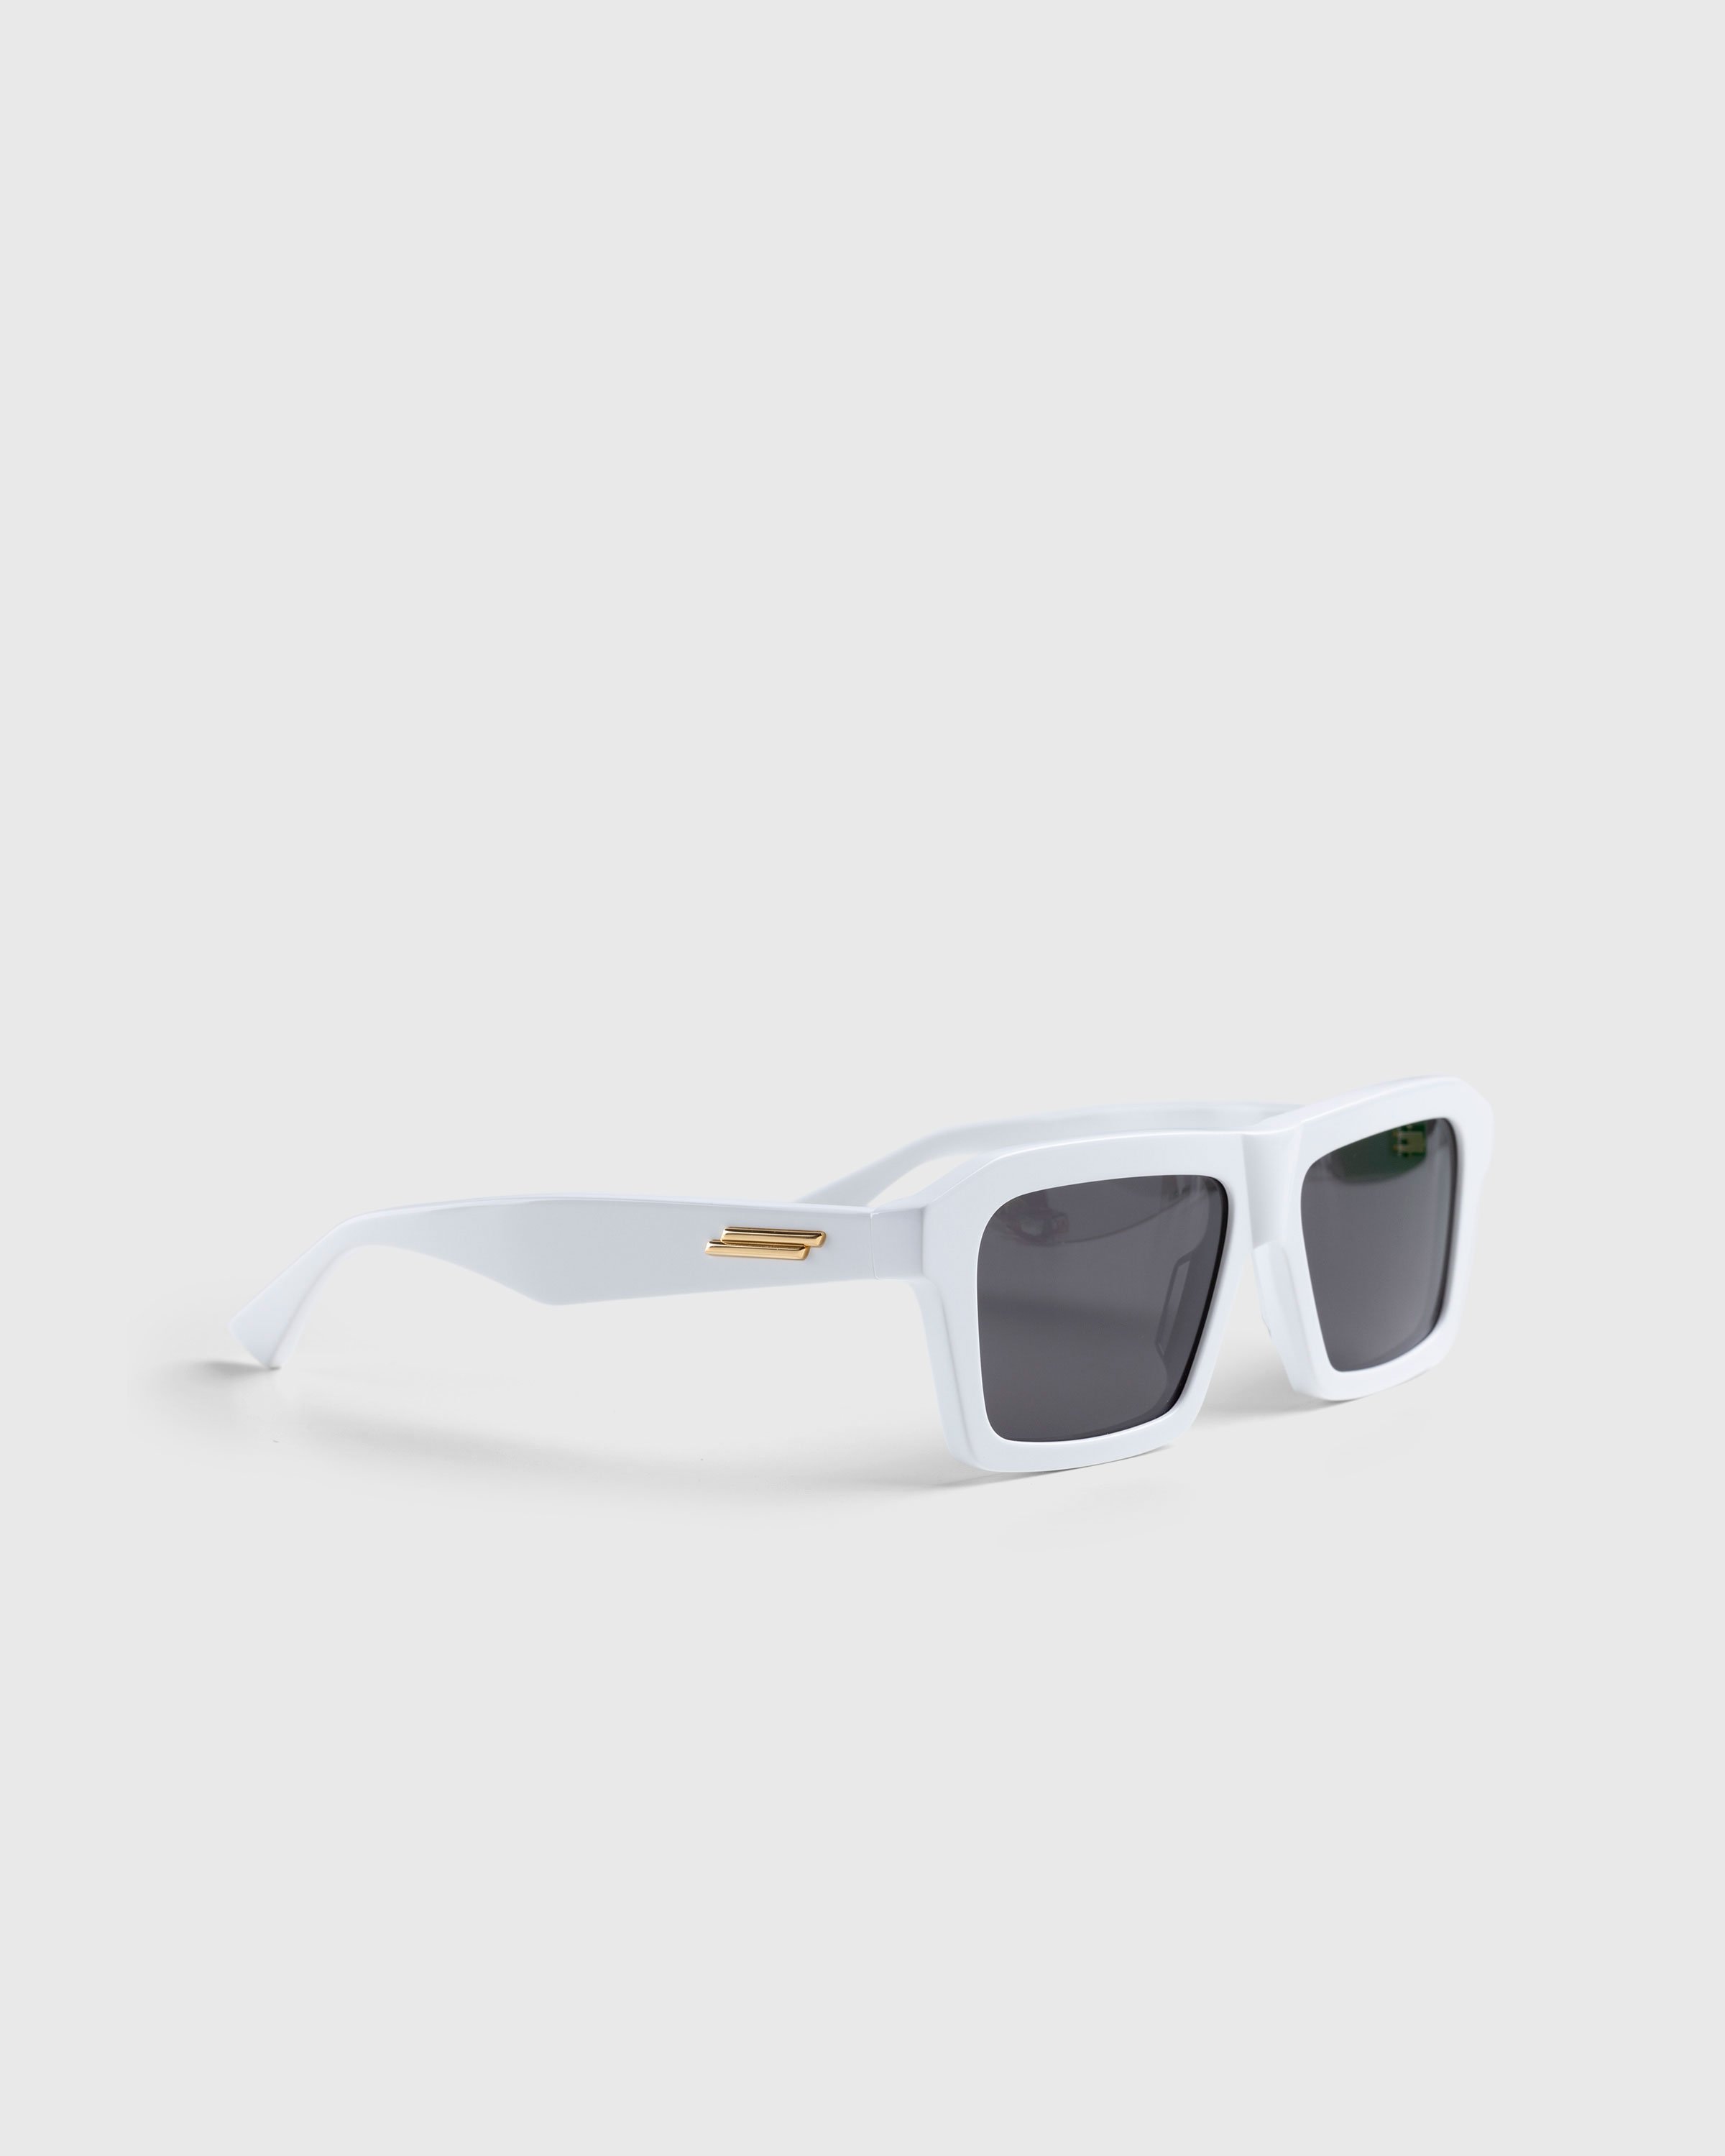 Bottega Veneta - Classic Square Sunglasses White/White/Grey - Accessories - Multi - Image 2